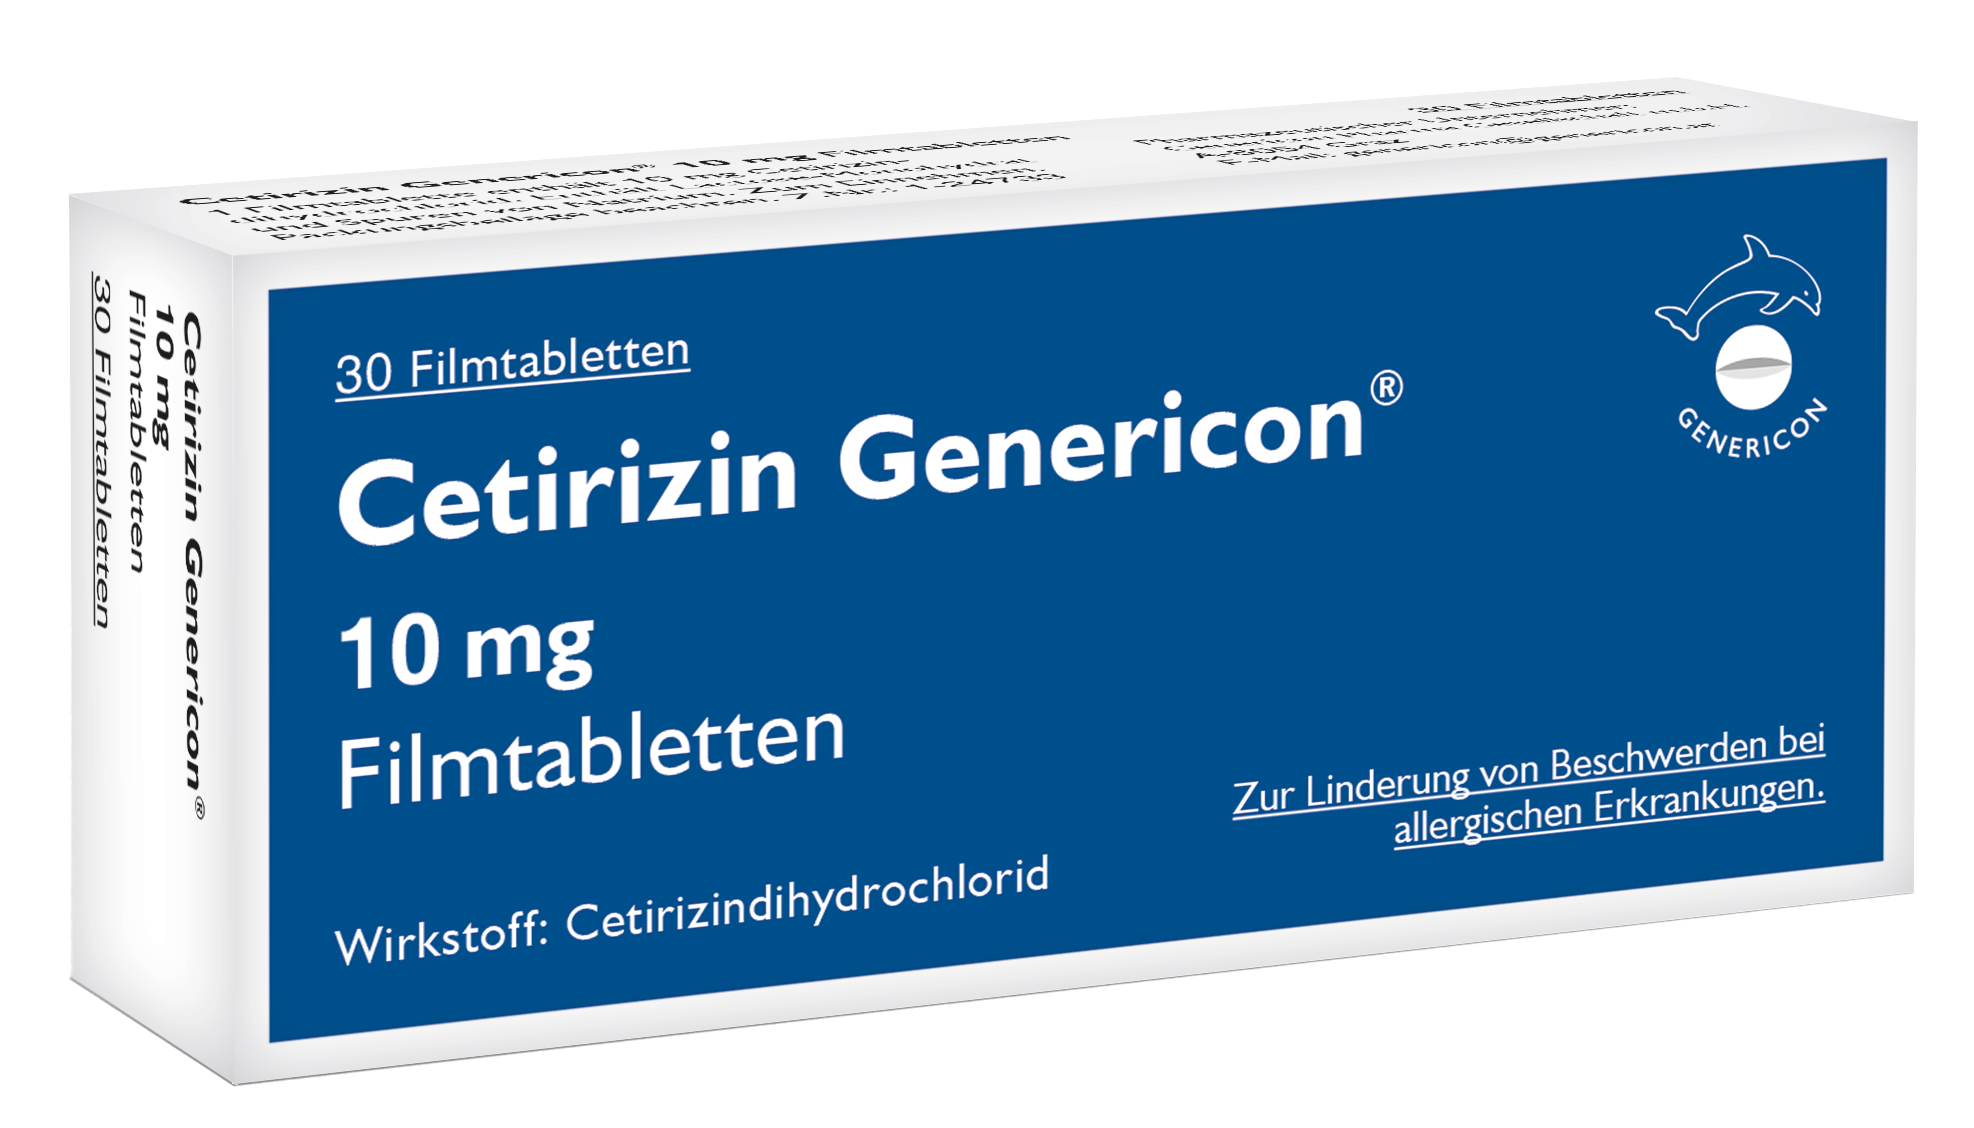 Cetirizin Genericon® 10 mg Filmtabletten